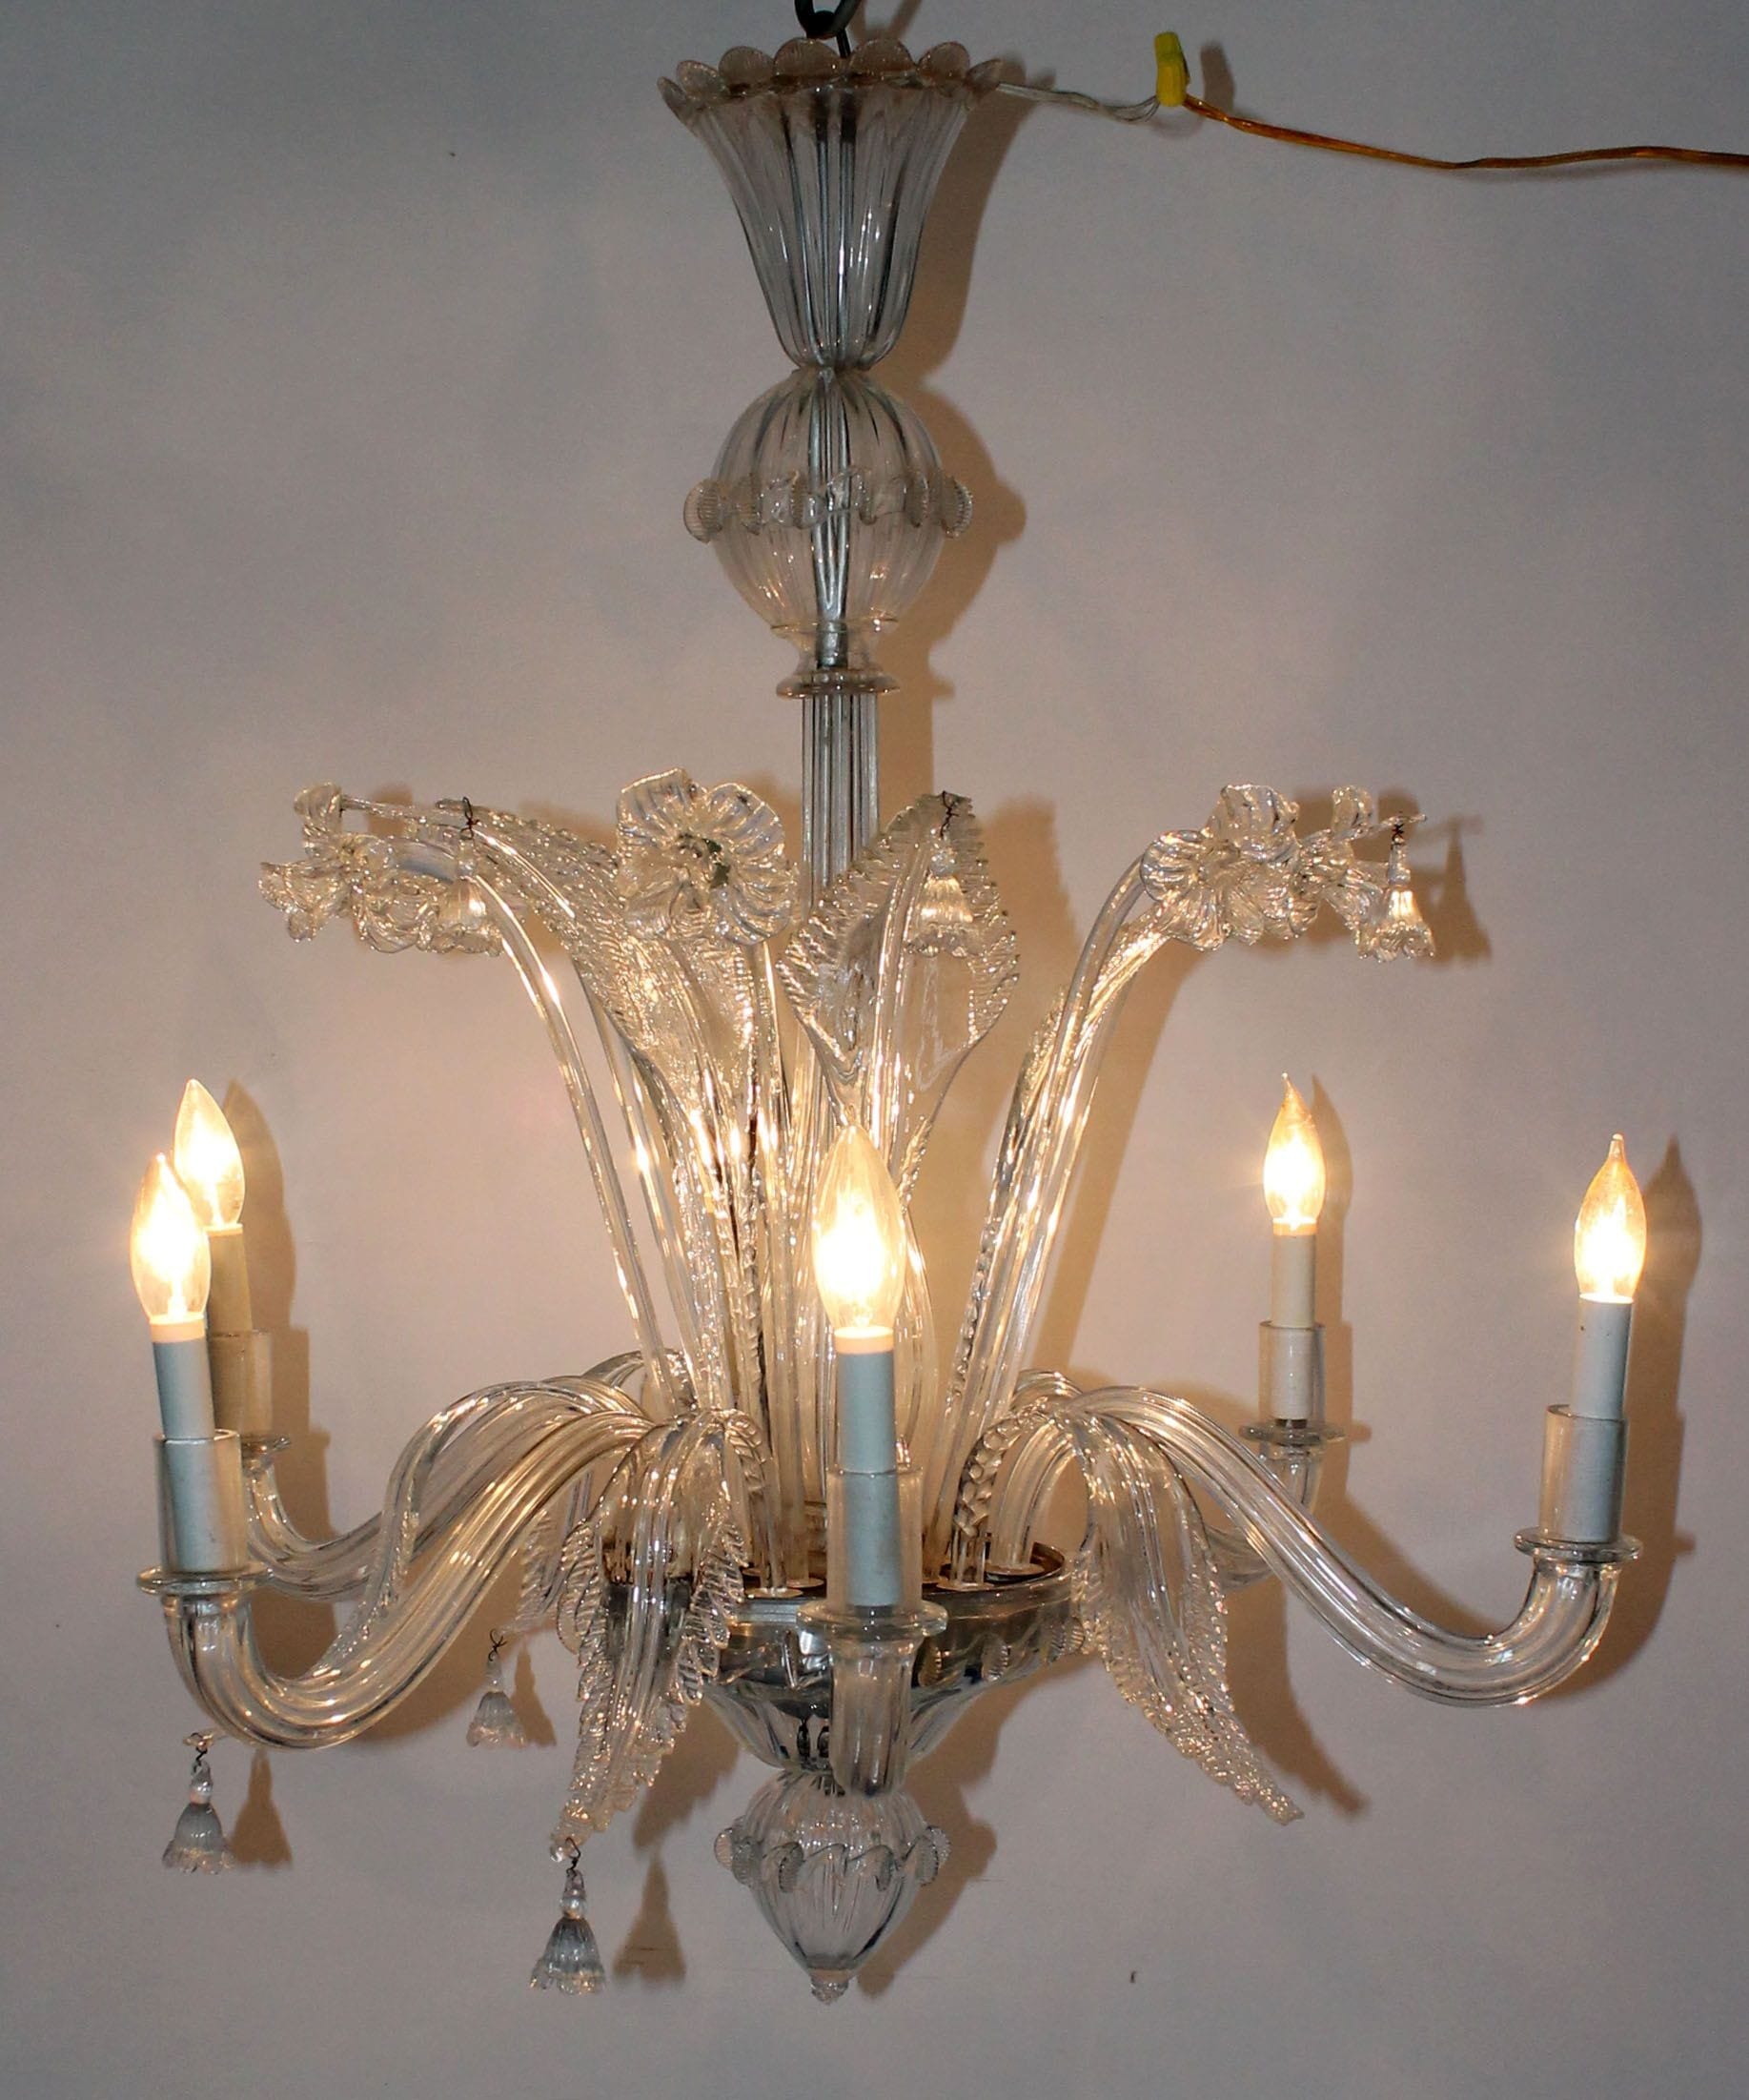 Venetian glas 6 arm chandelier